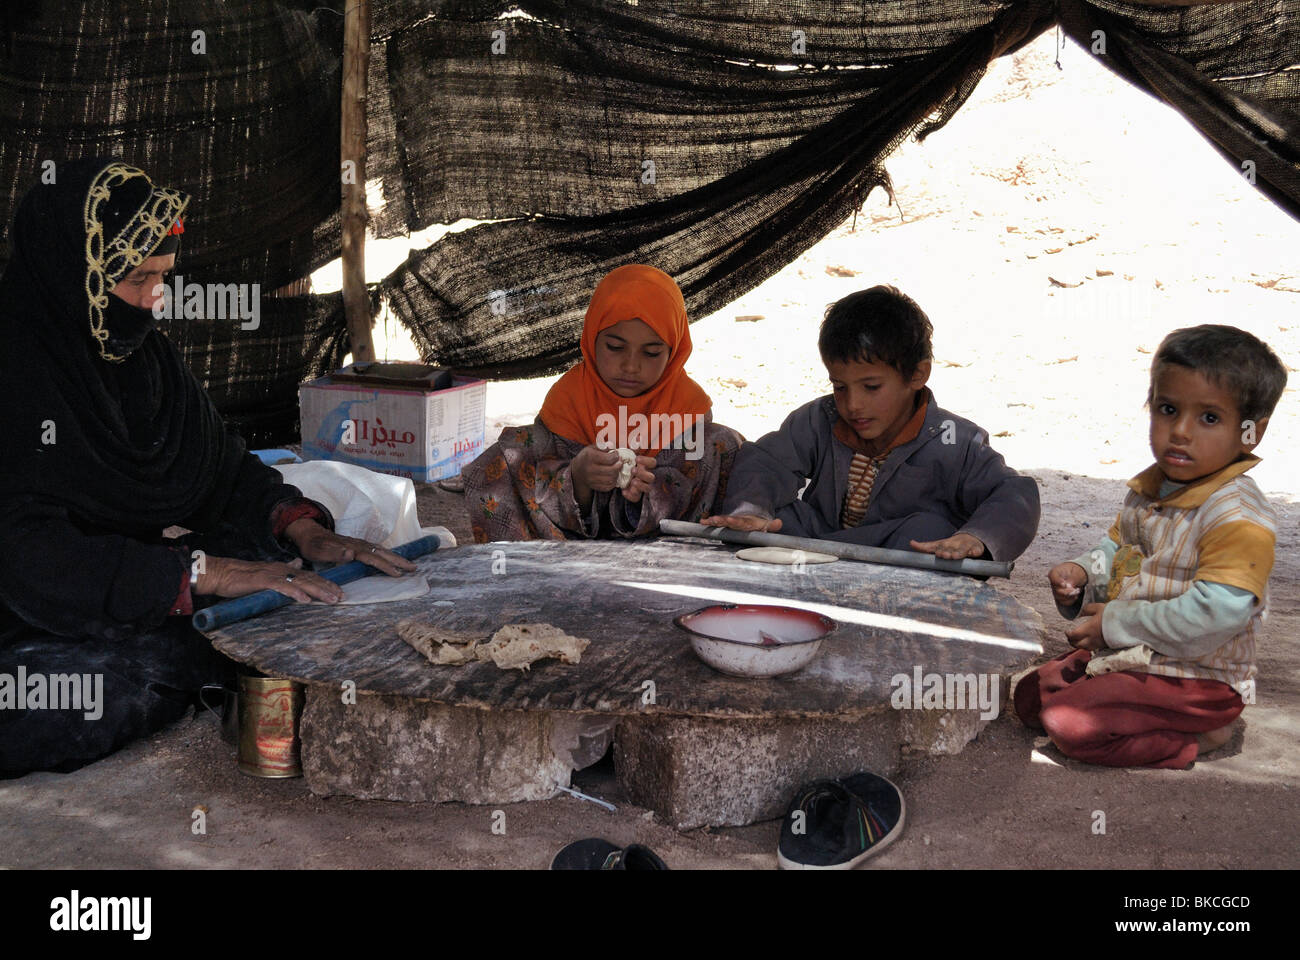 Bedouin women and children making bread inside tent Stock Photo